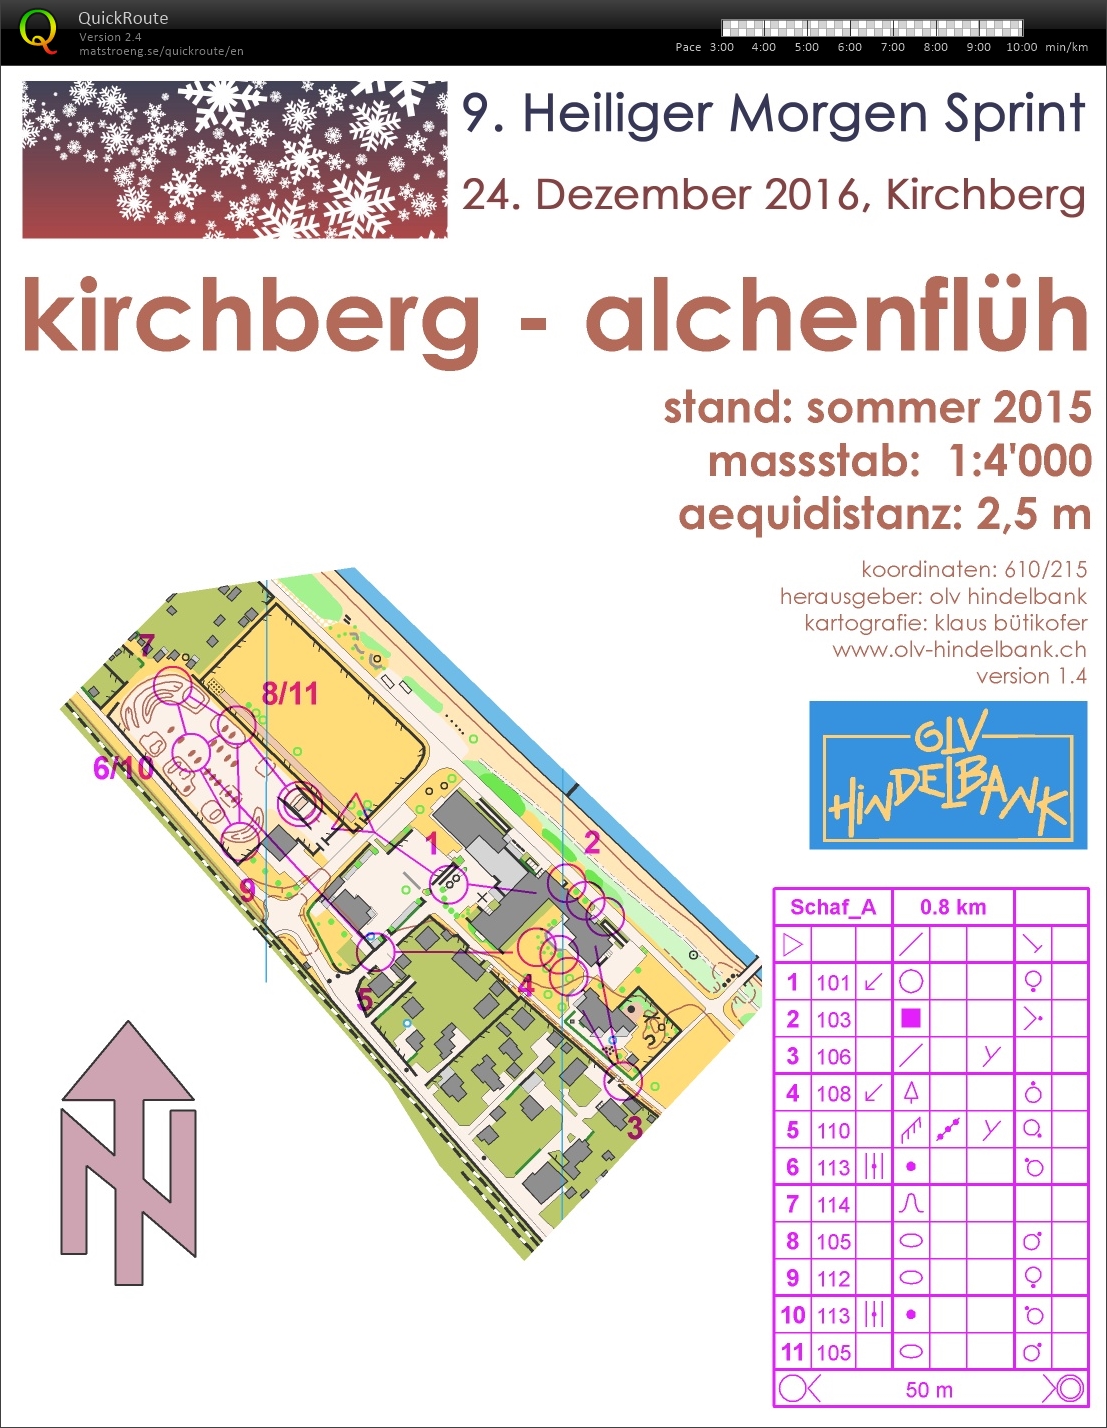 Heiligmorgesprint - Prolog (2016-12-24)